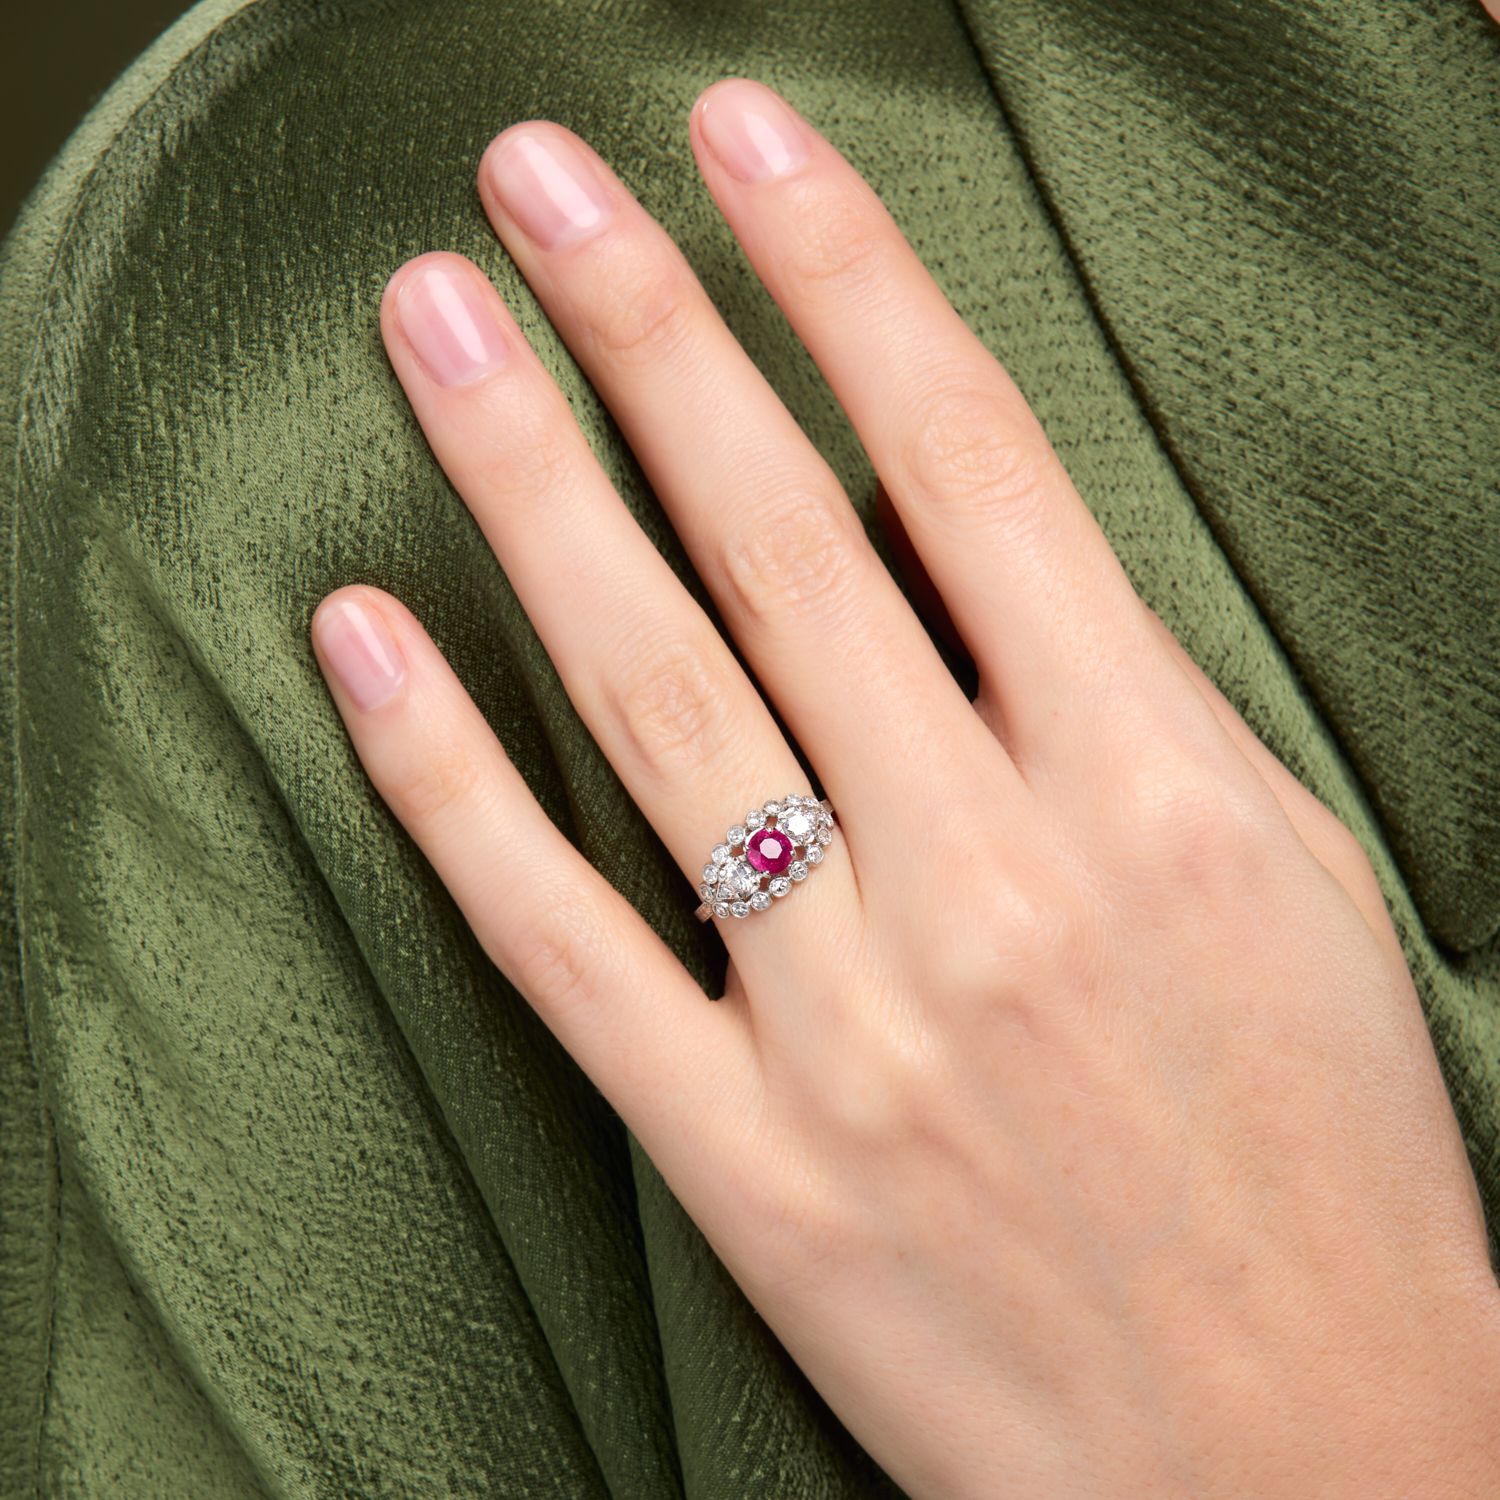 BAGUE JOAILLERIE RUBIS 它镶嵌着一颗圆形红宝石，周围是圆形和明亮式切割钻石。铂金镶嵌。 
毛重：2.88克。 
手指大小：52。 
, 
&hellip;